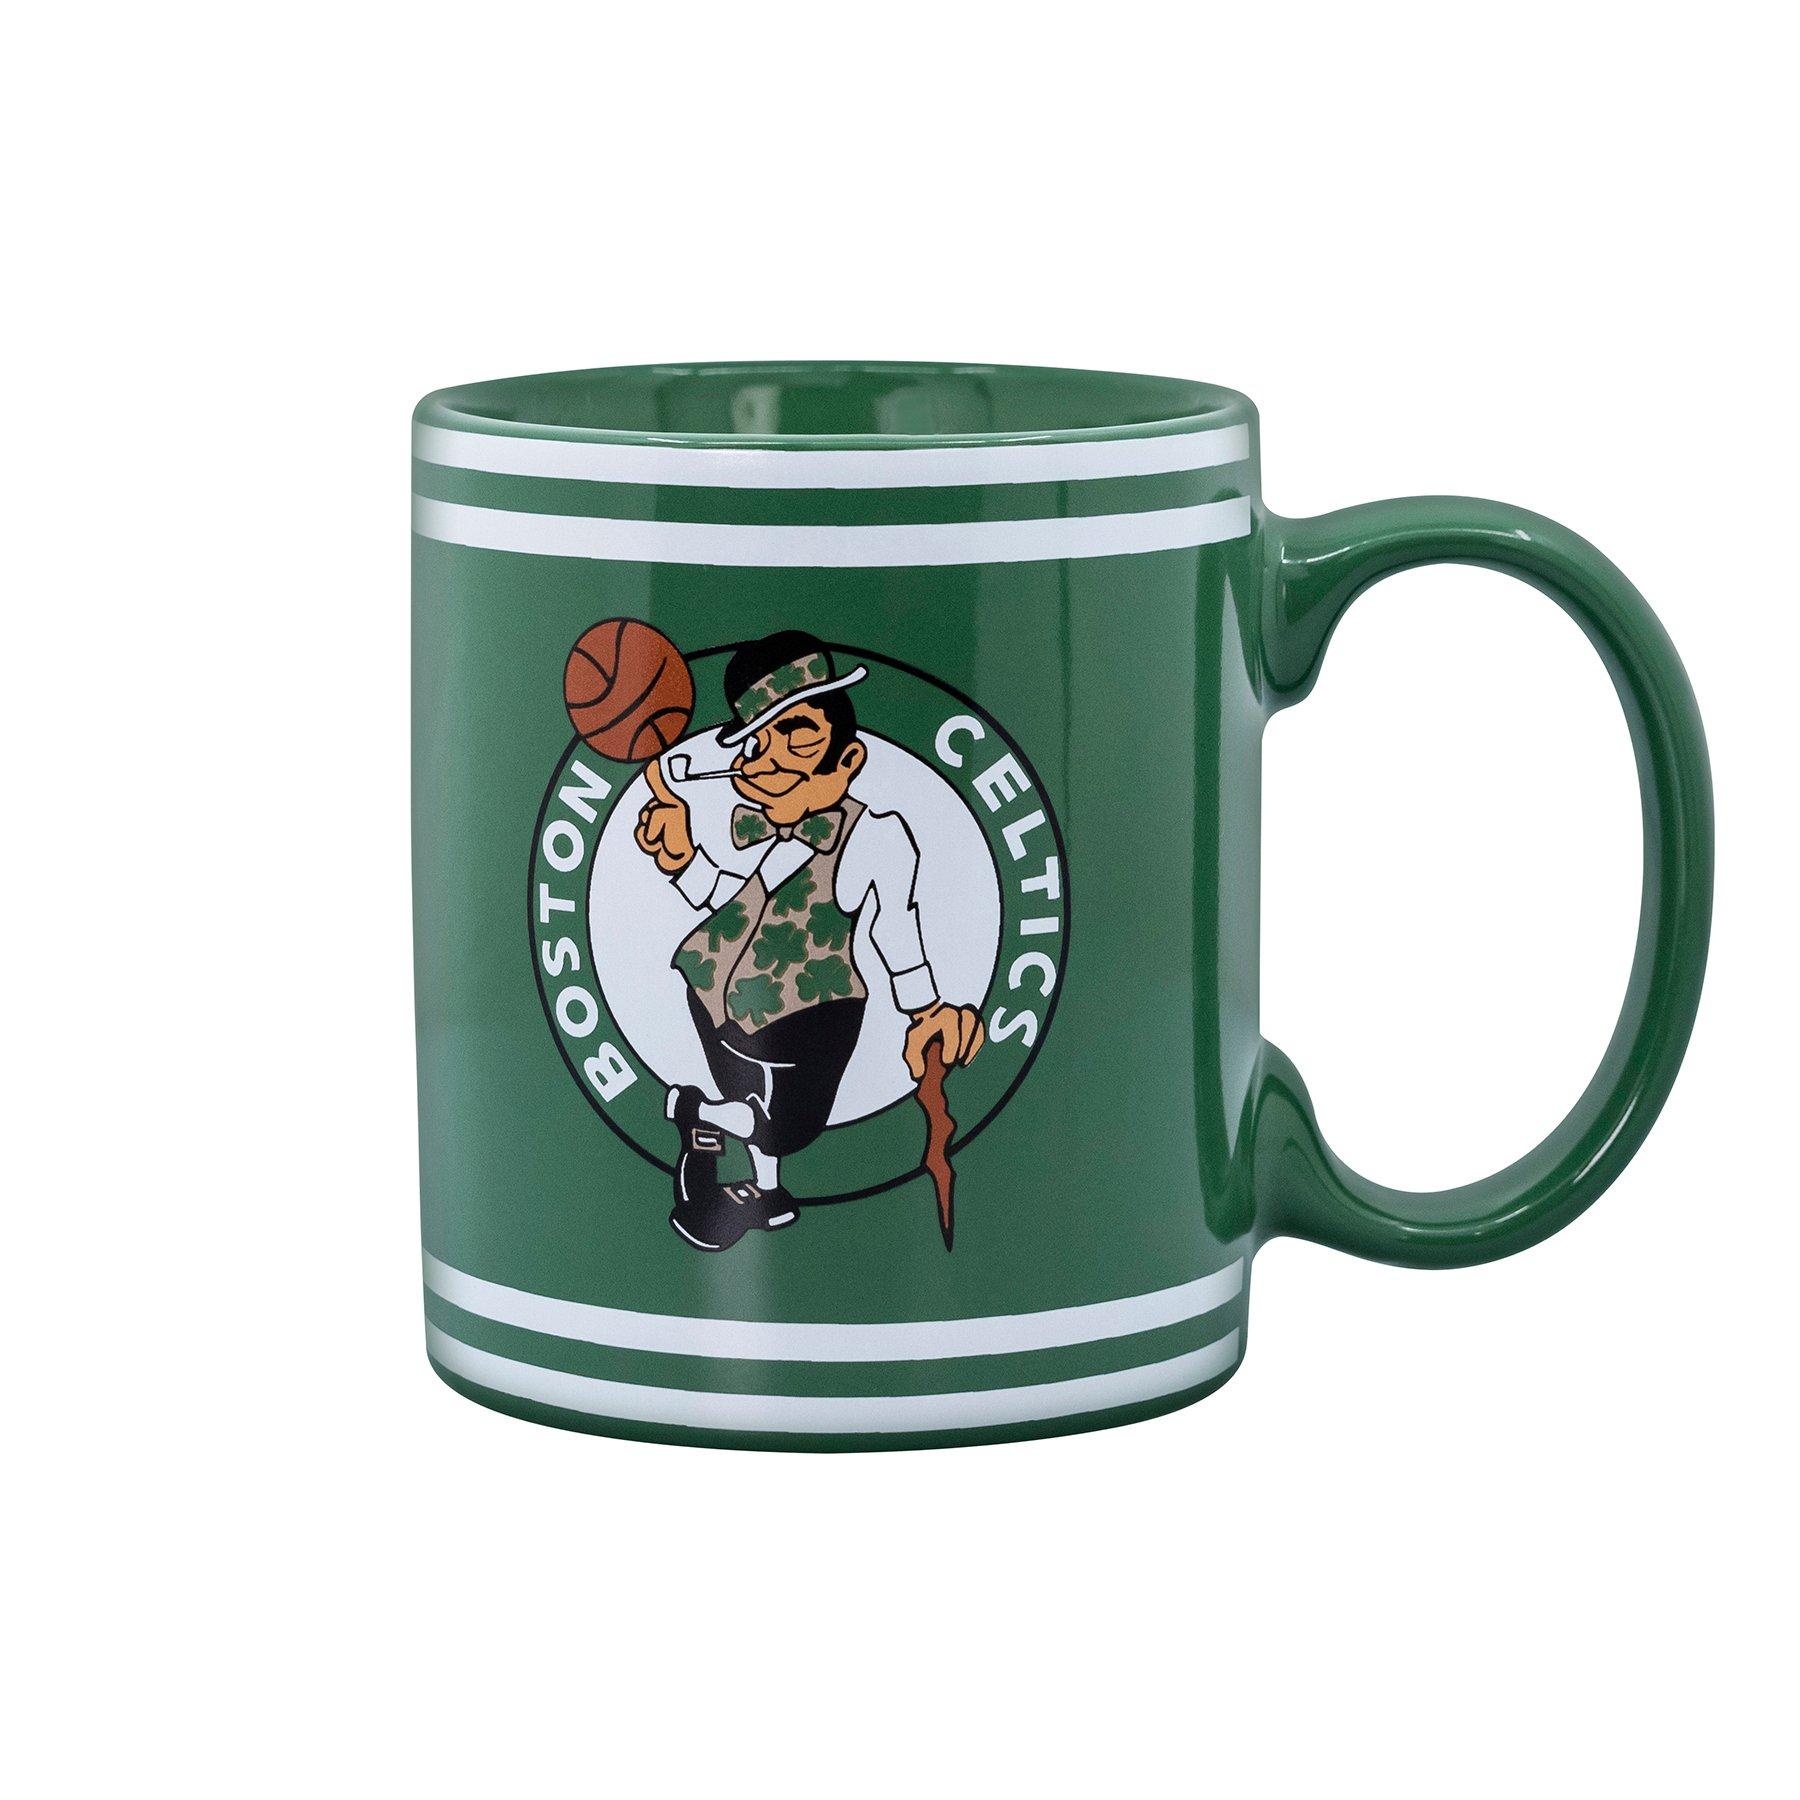 https://media.gamestop.com/i/gamestop/20005550_ALT01/Boston-Celtics-Logo-Mug-Warmer-with-Mug?$pdp$